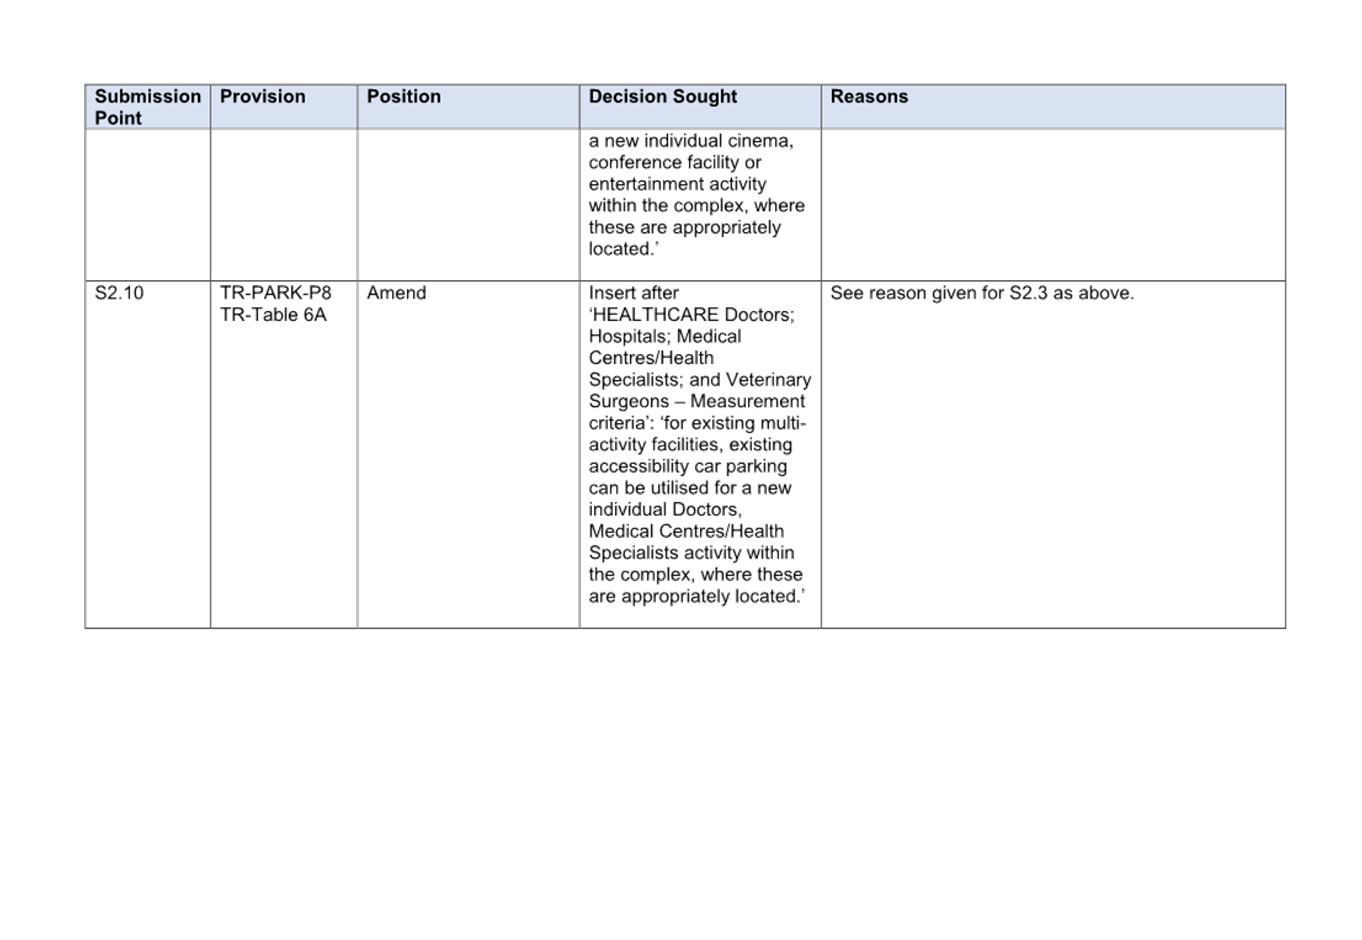 A screenshot of a computer screen

Description automatically generated